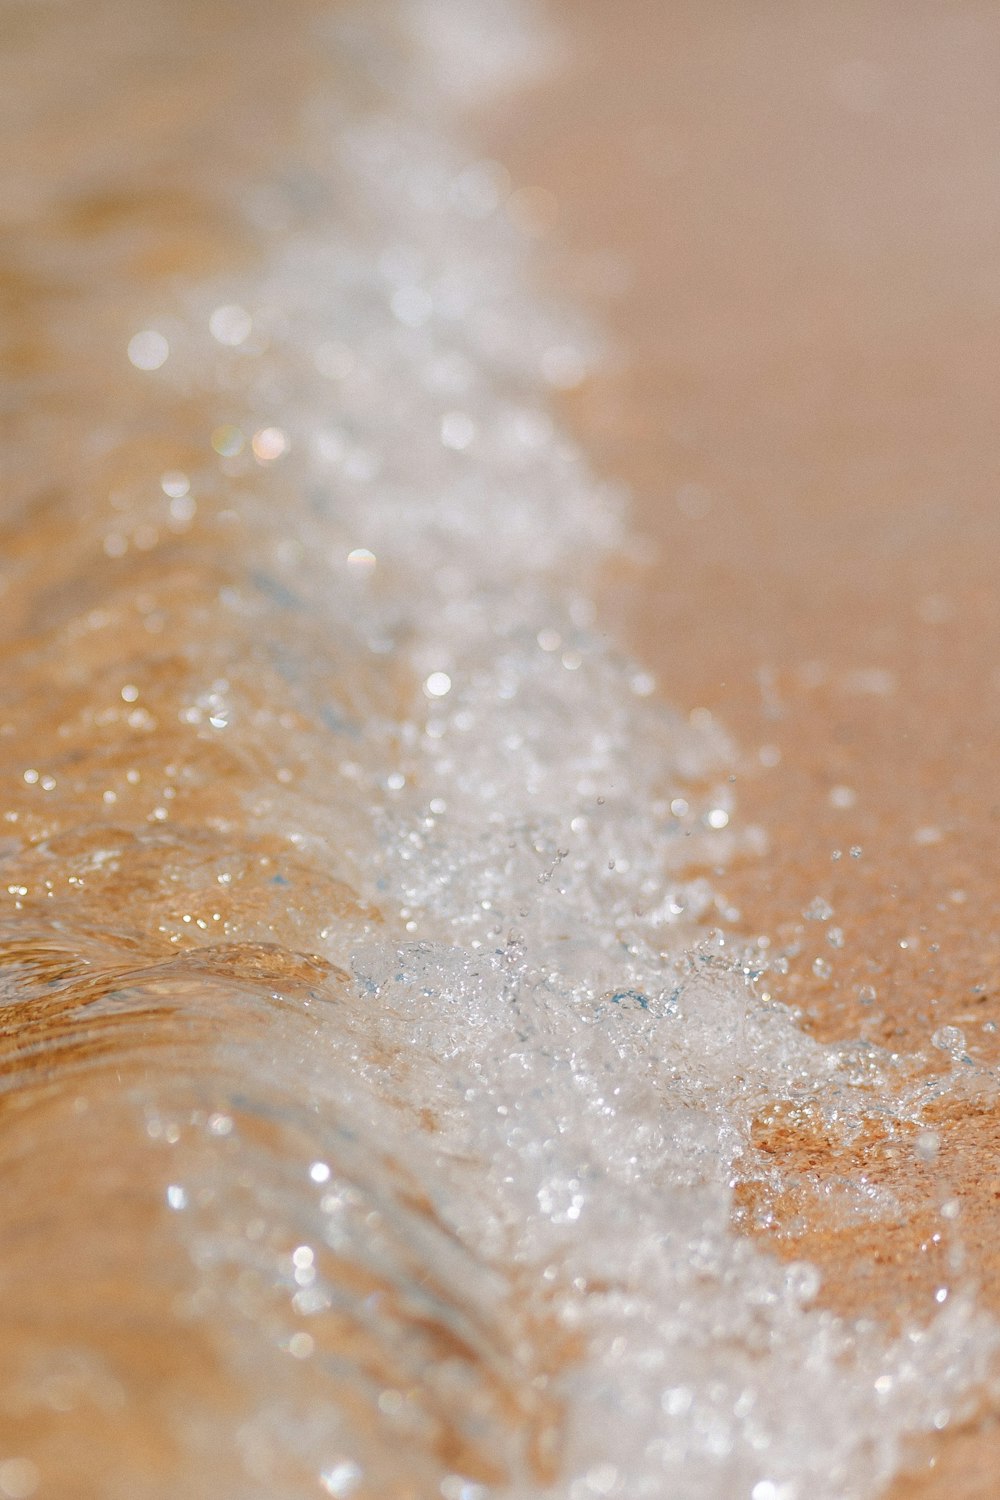 water splash on brown wooden surface